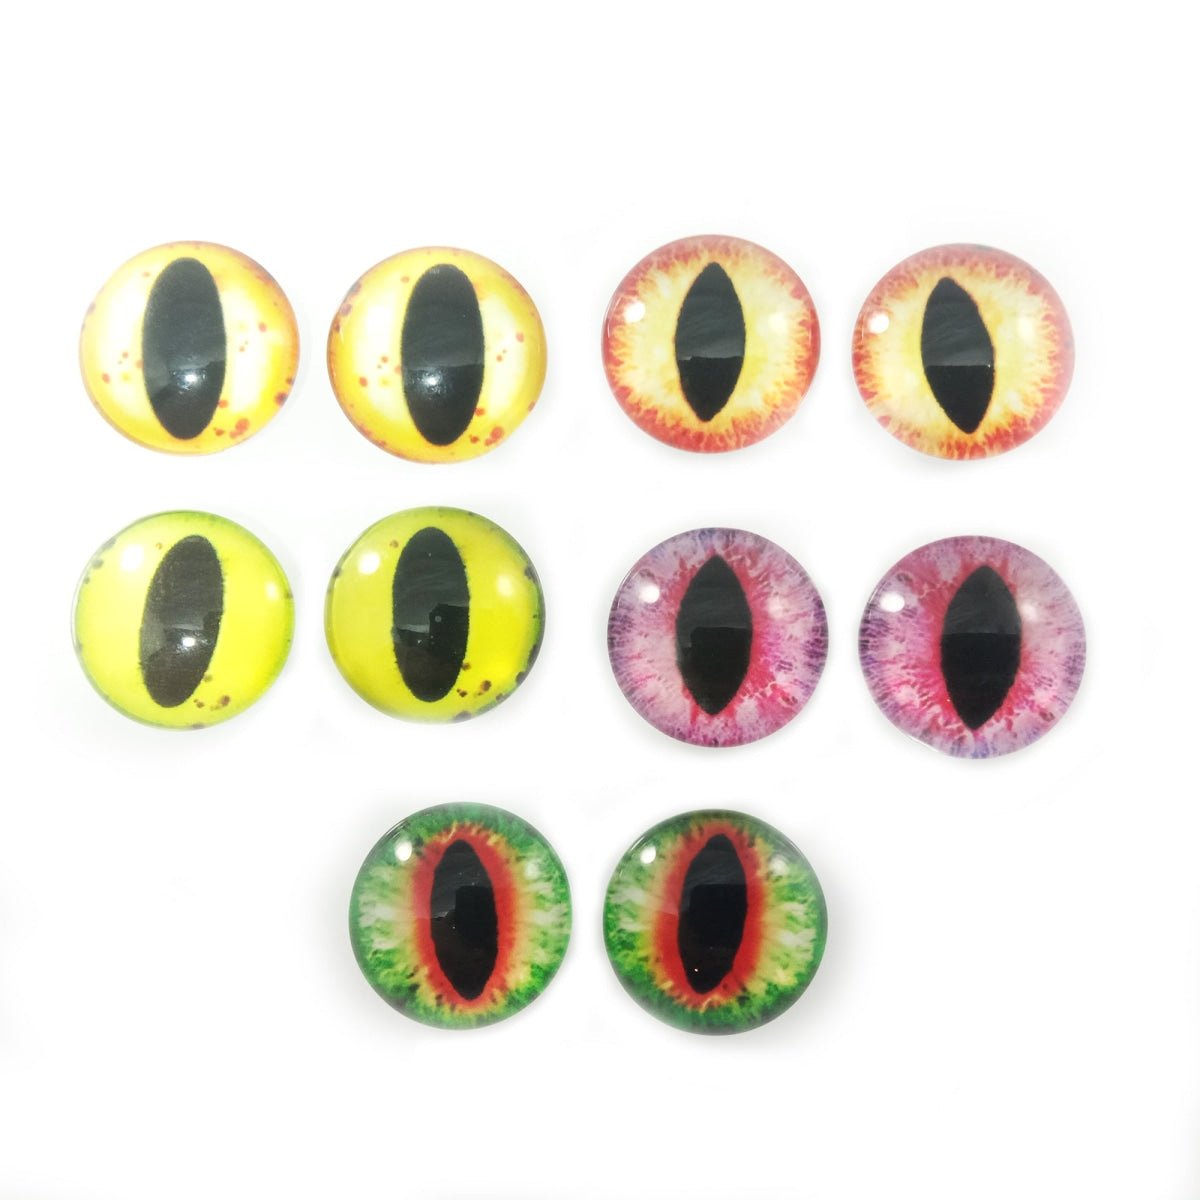 10pcs Round 15mm Glass Eyes Dragon Lizard Frog Eyeballs - Mixed Set 2 - - Asia Sell